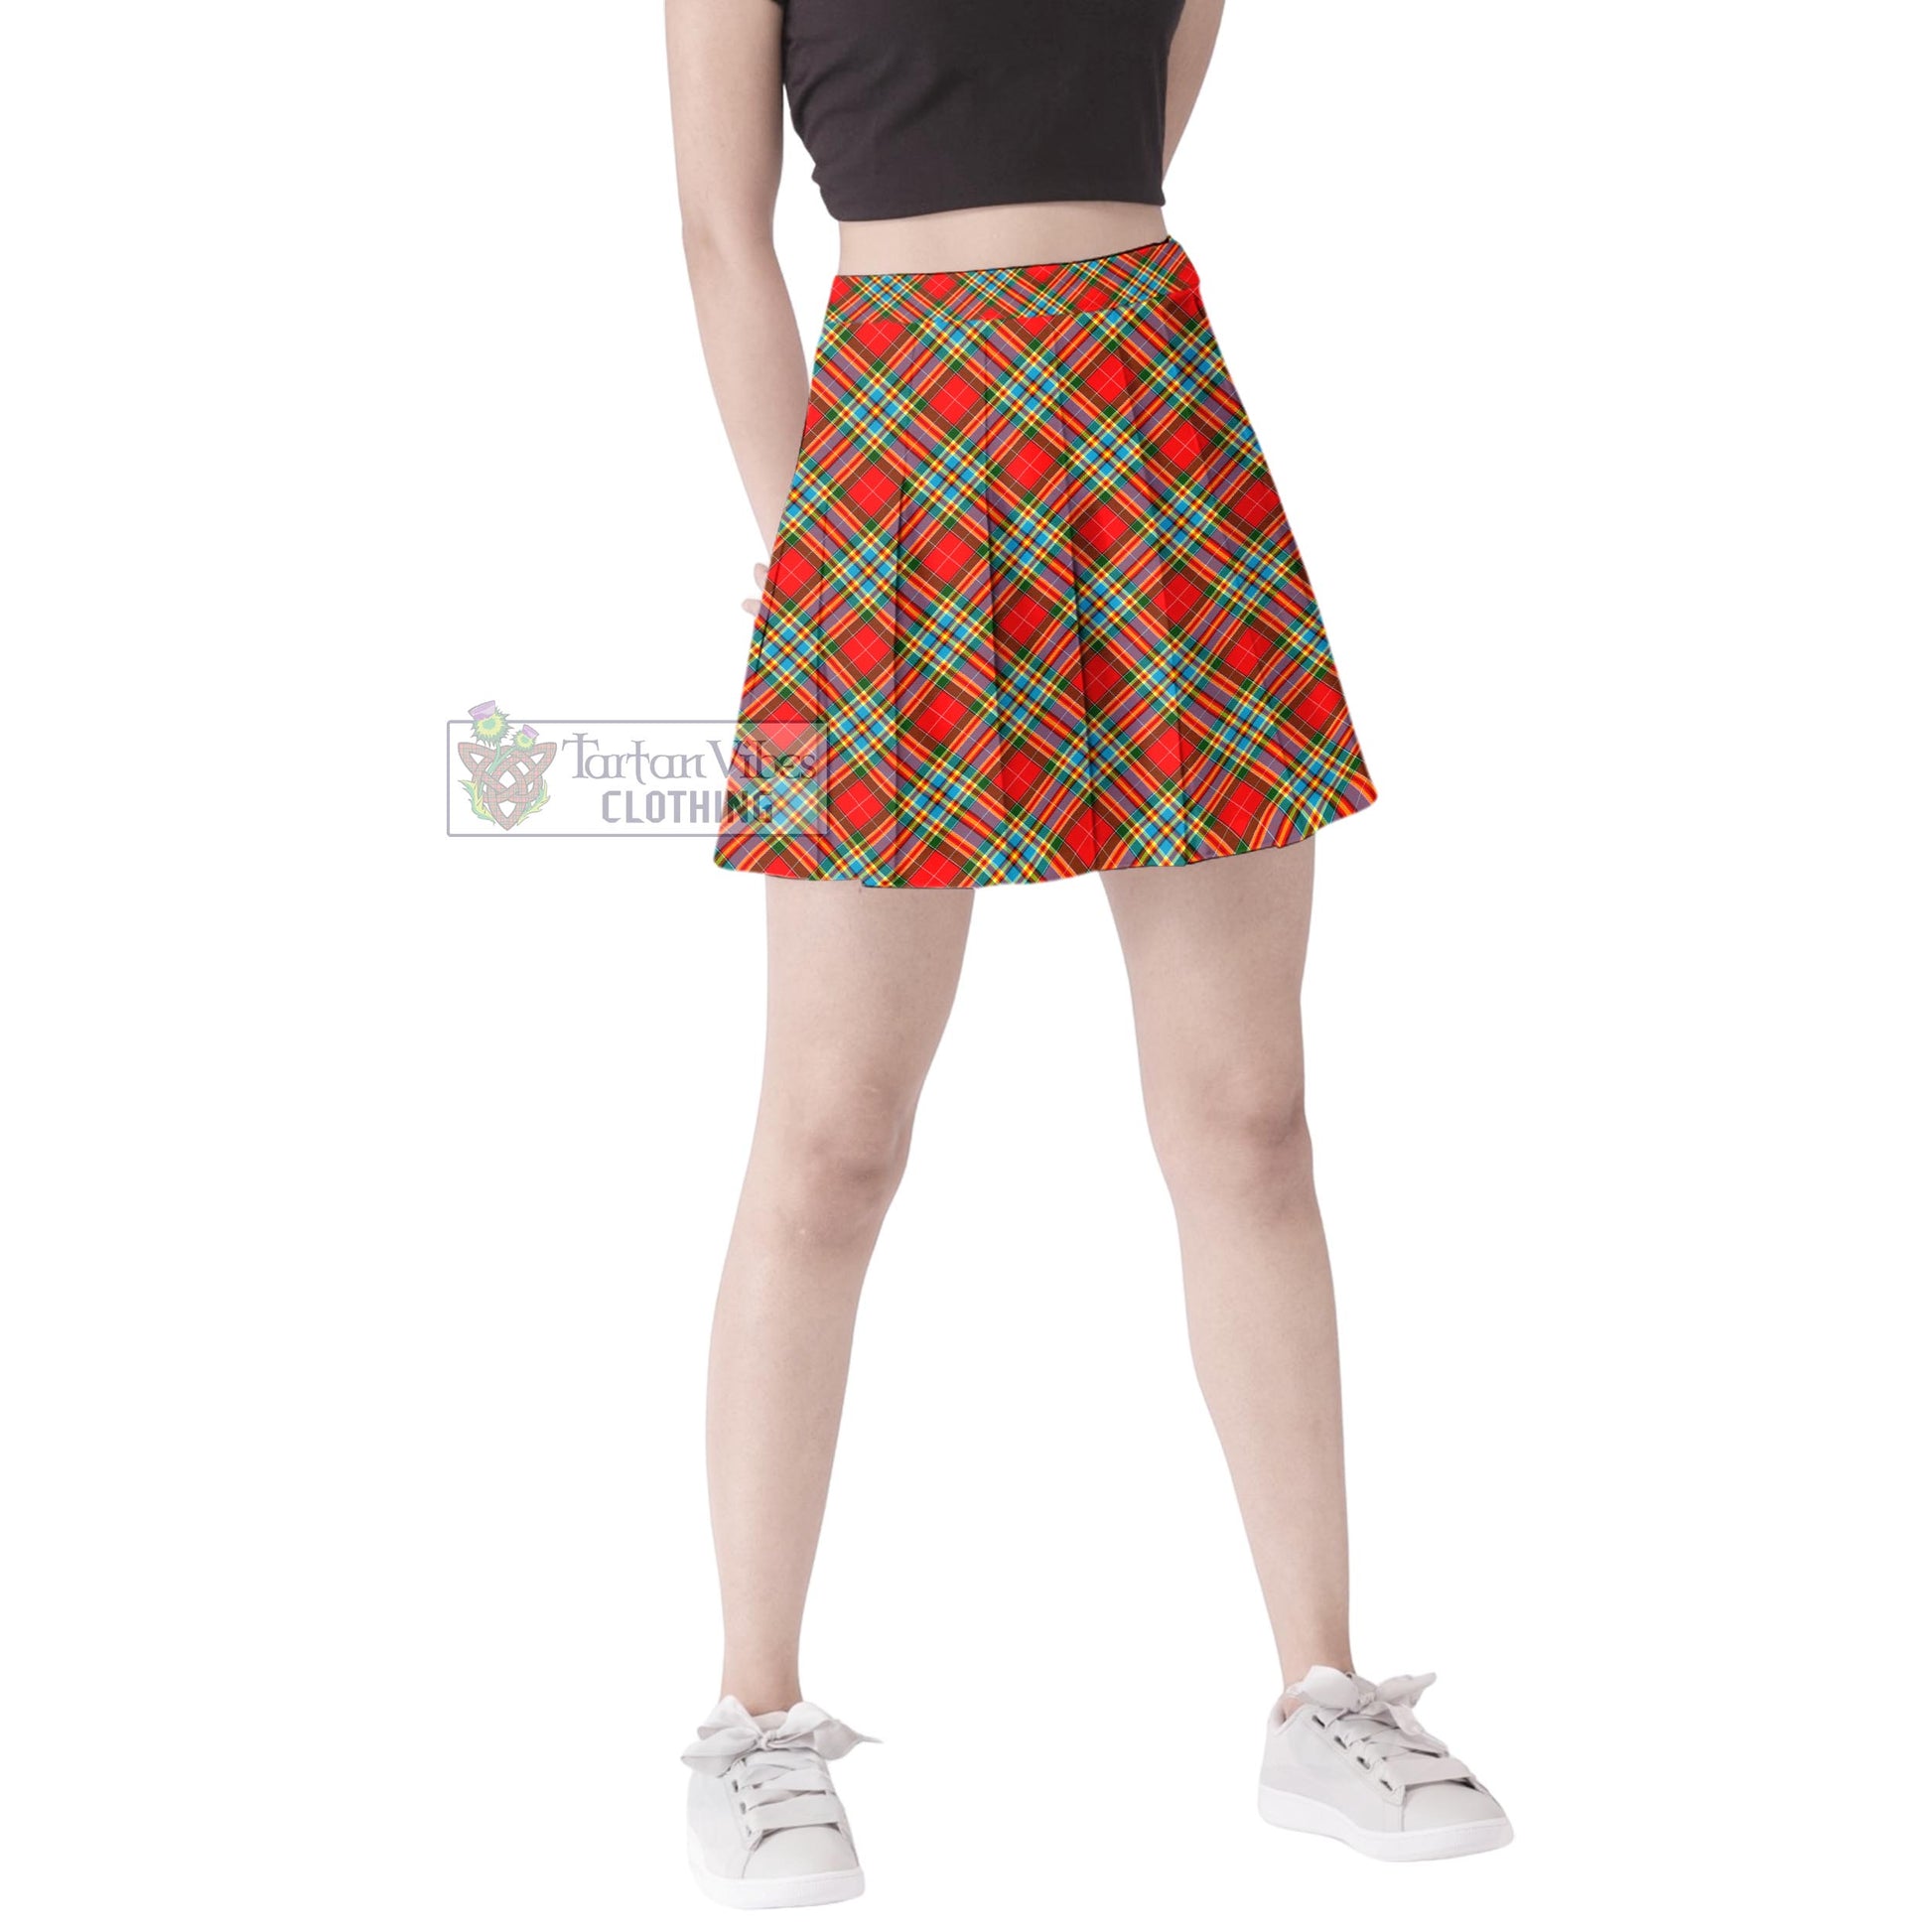 Tartan Vibes Clothing Chattan Tartan Women's Plated Mini Skirt